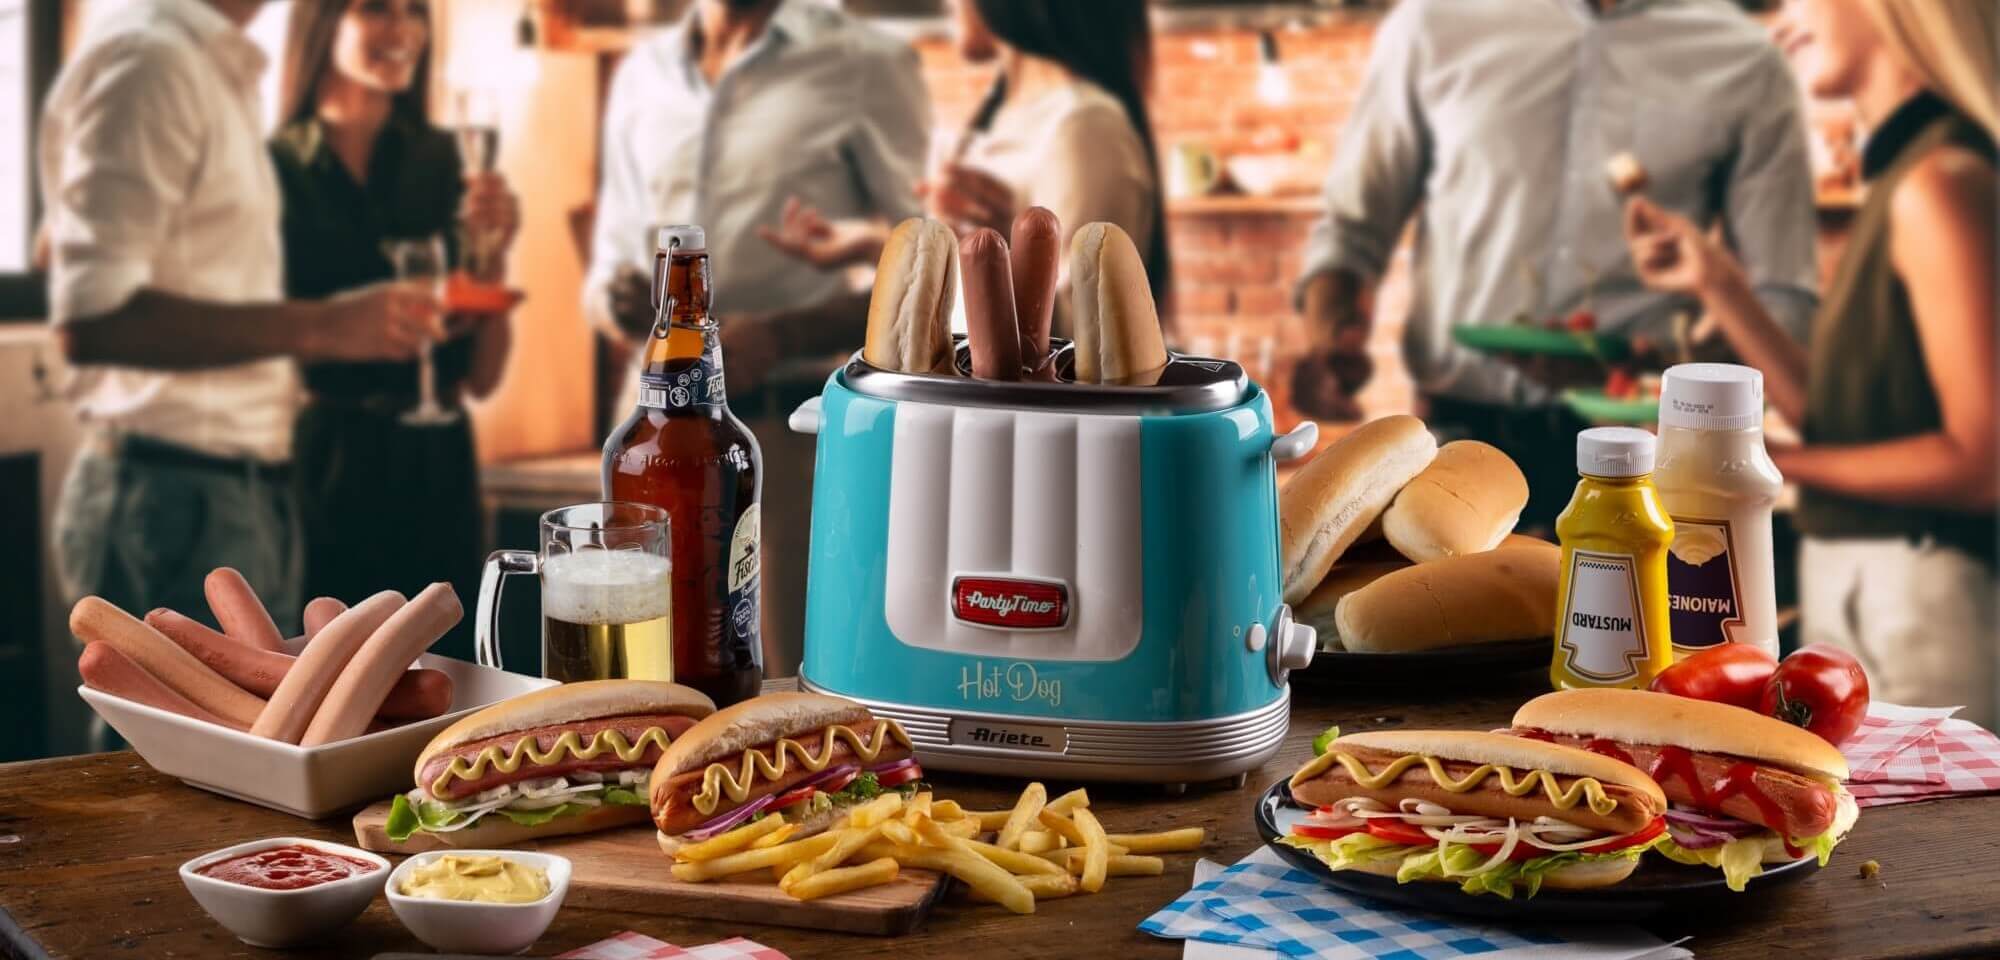 Hot Dog Maker Light Machine Time | Blue| Ariete Hot Dog Party